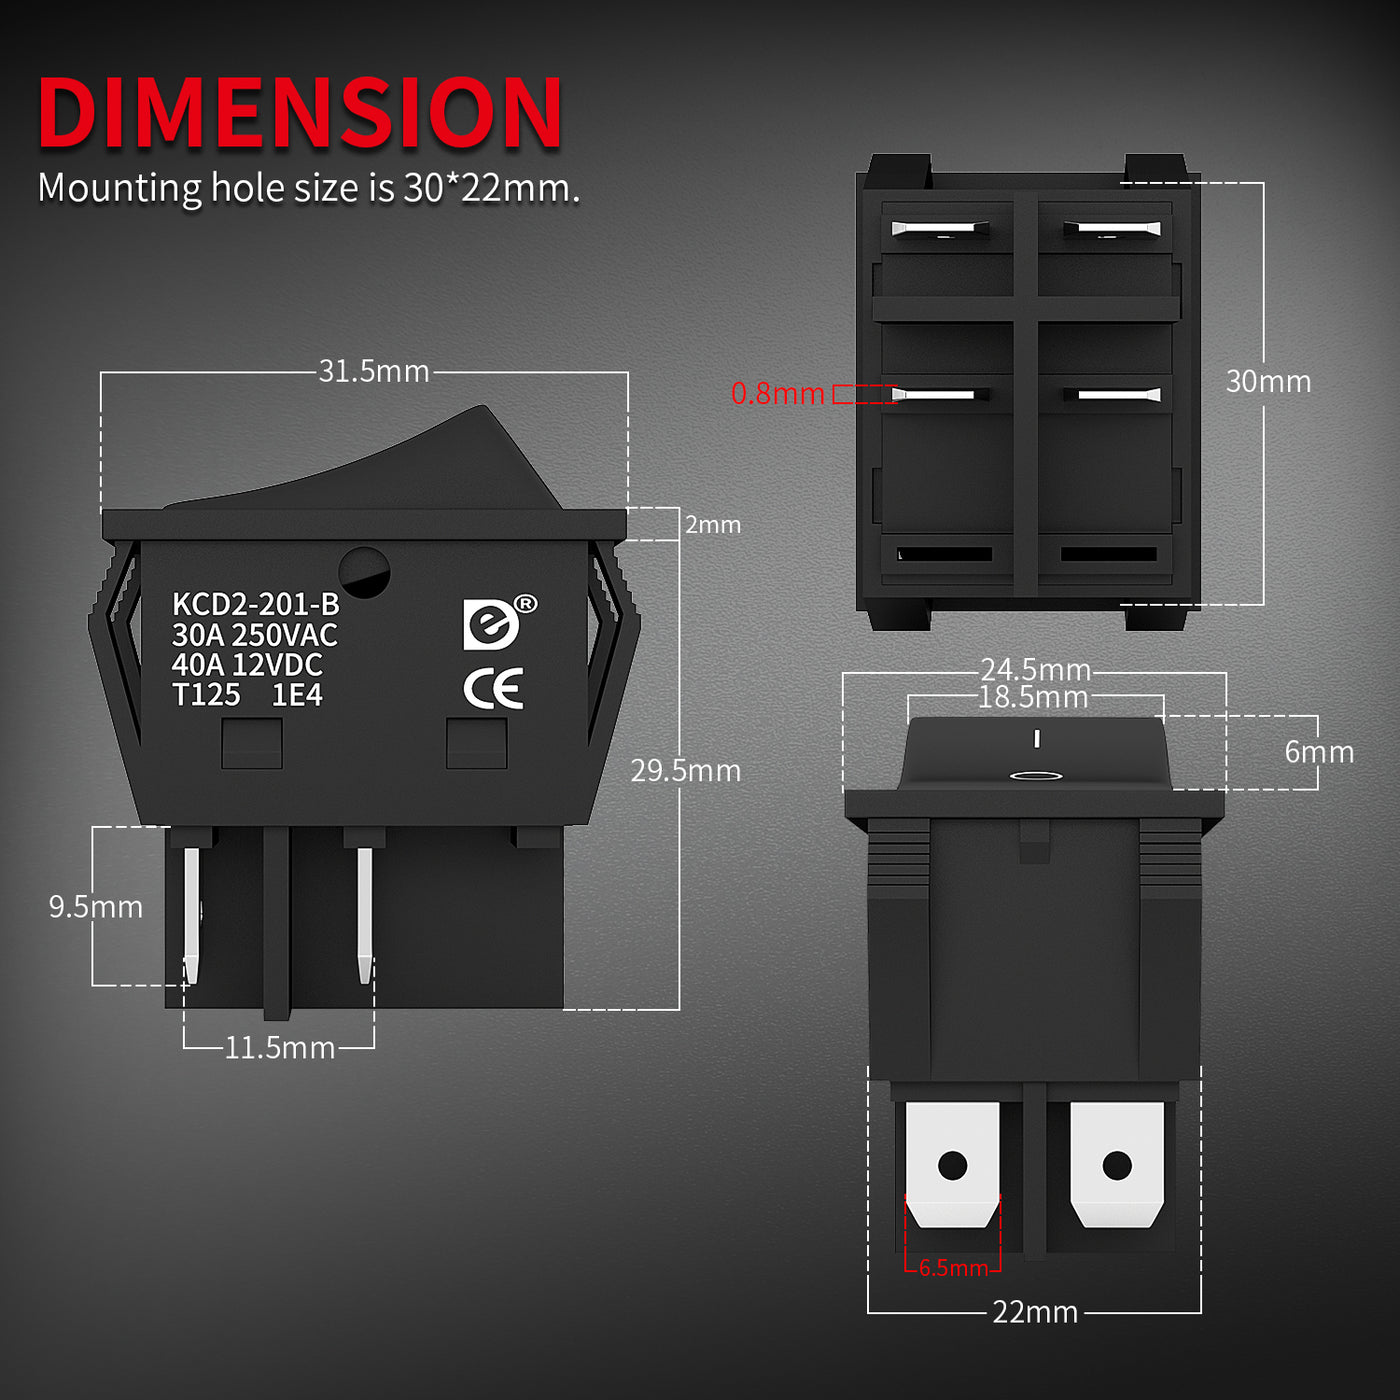 KCD2-201-B 40A 12VDC KCD4 Rocker Switch Dimension